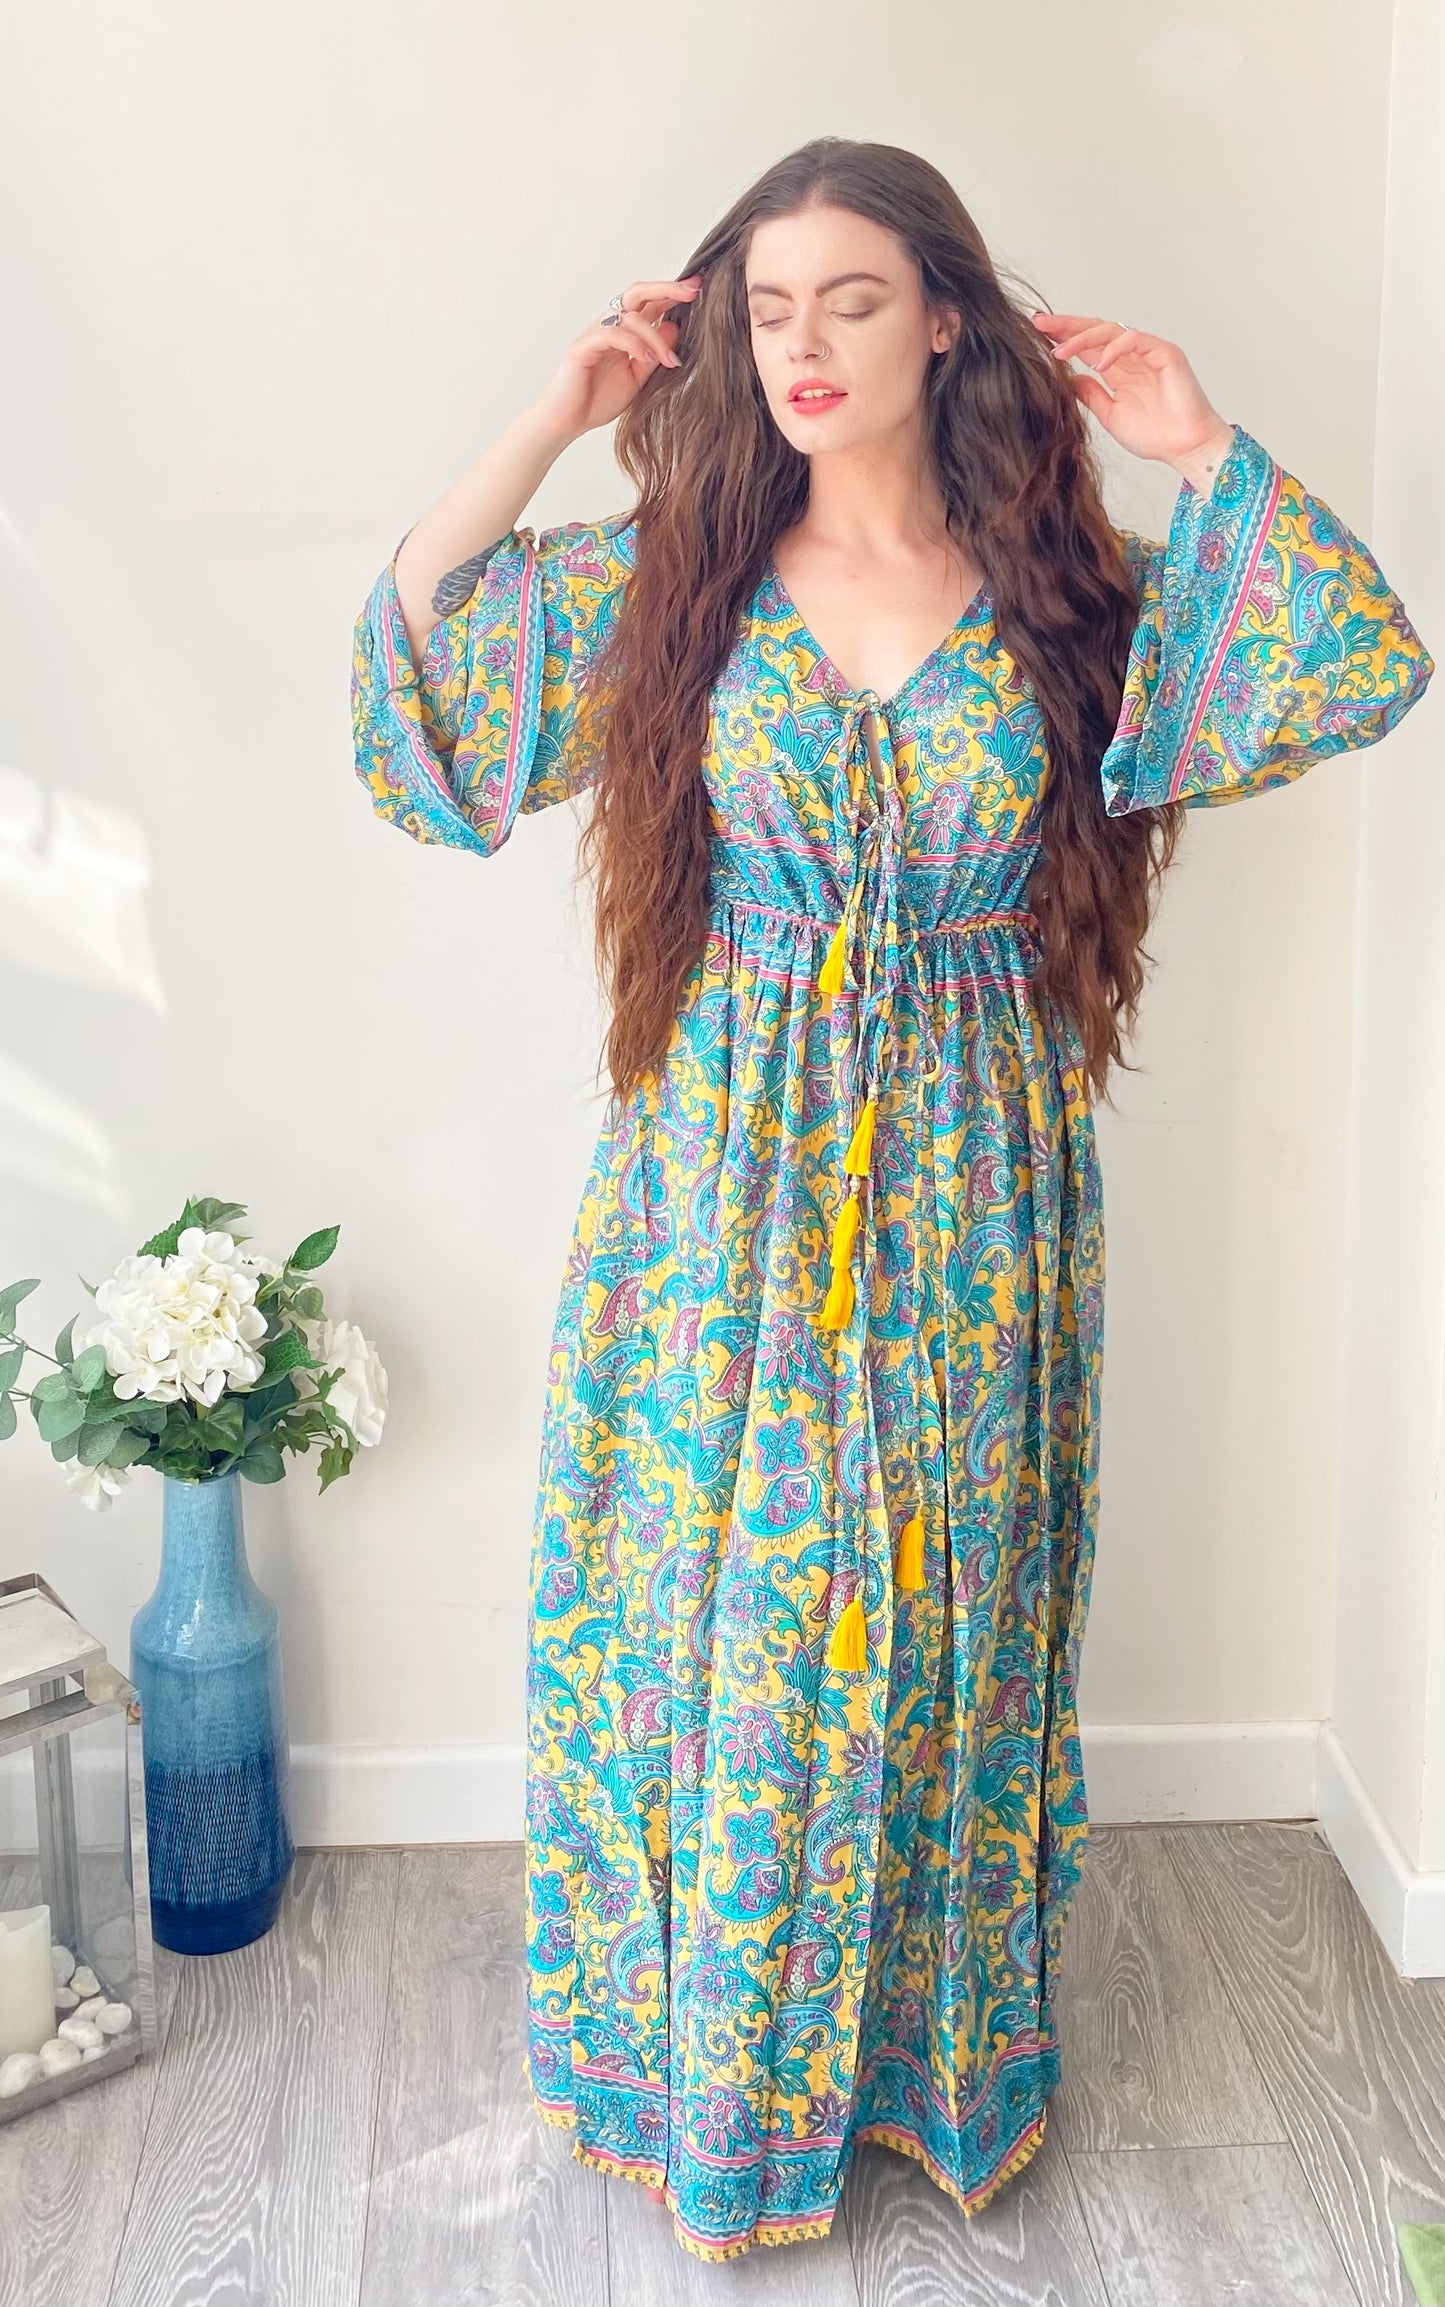 Nova yellow turquoise floral print silk maxi dress free size UK8-16DRESSES